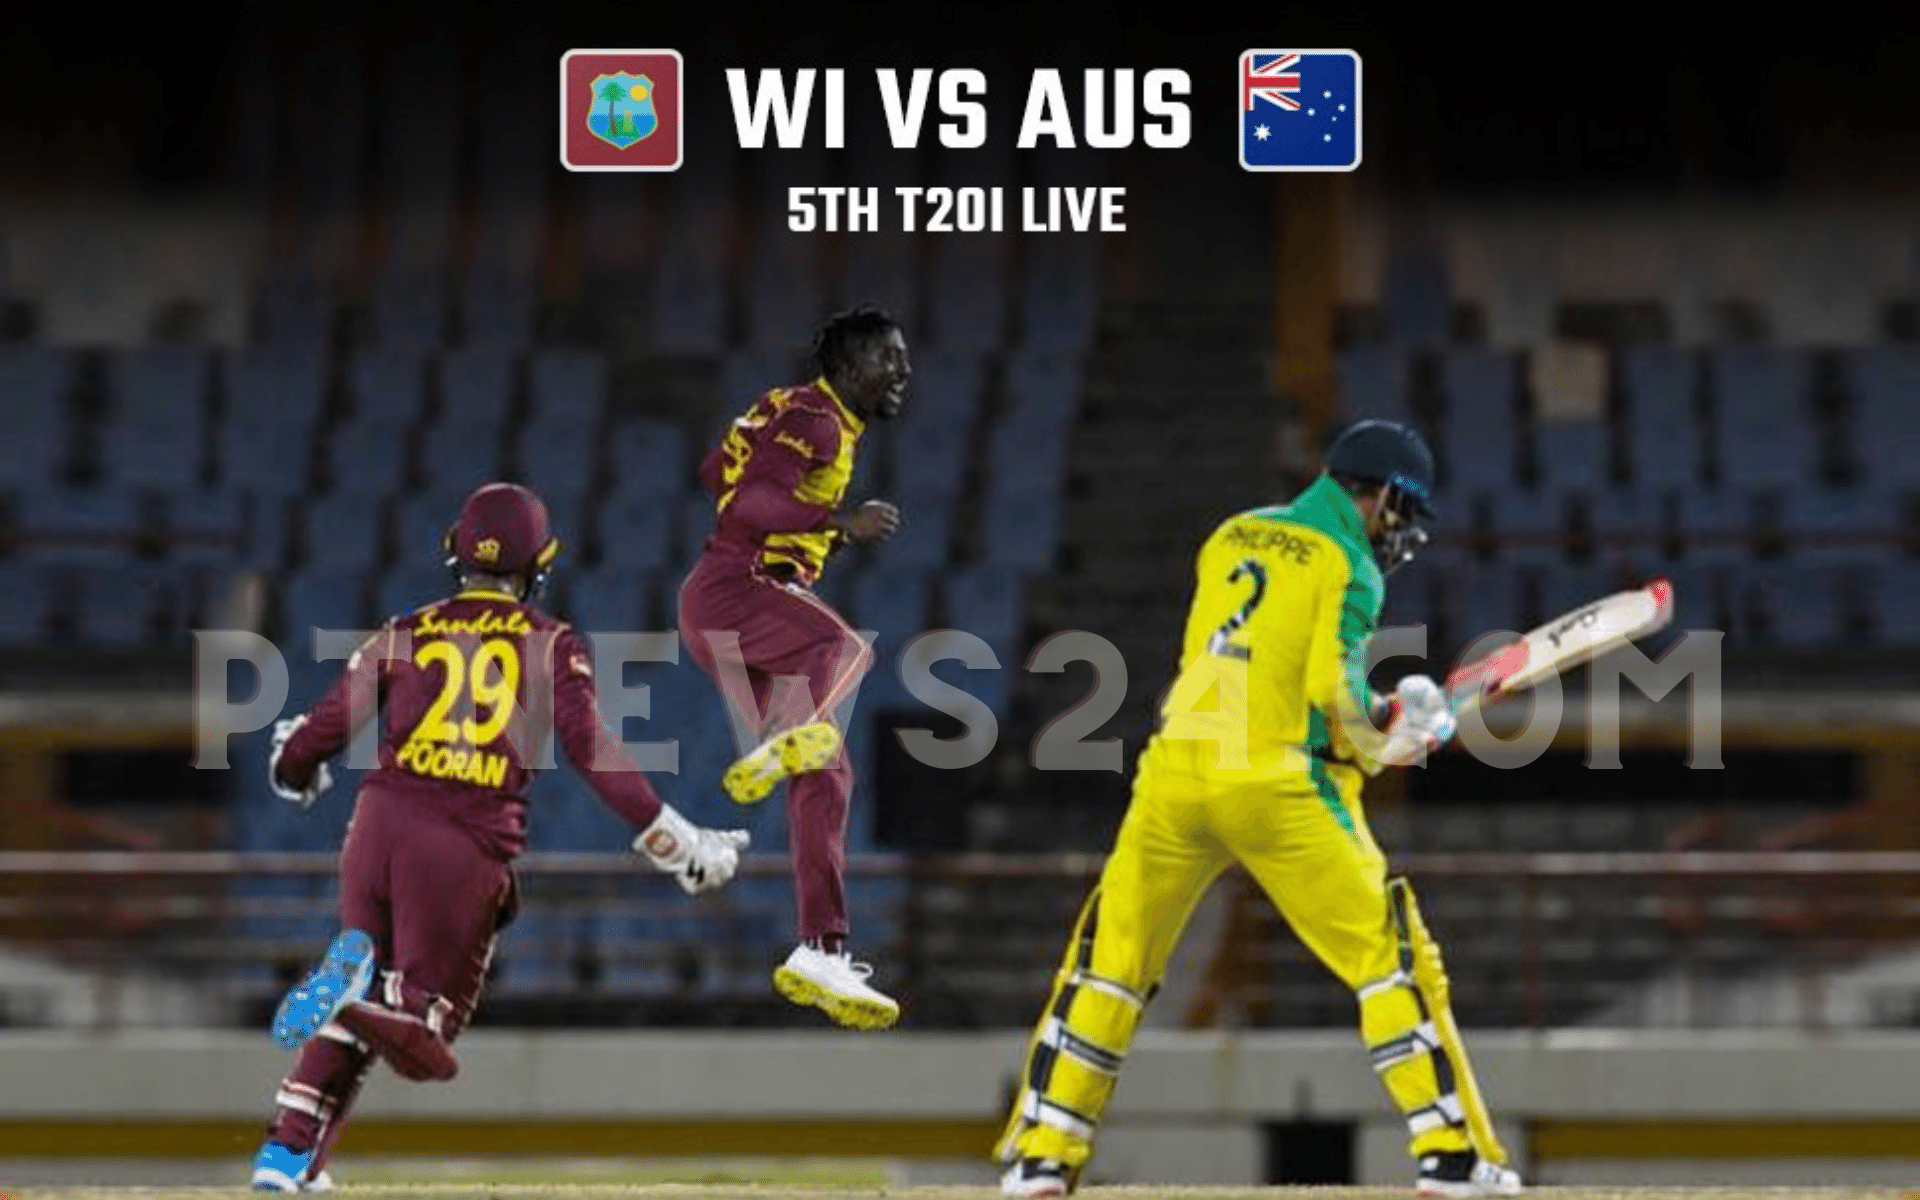 WI vs AUS, 5th T20I